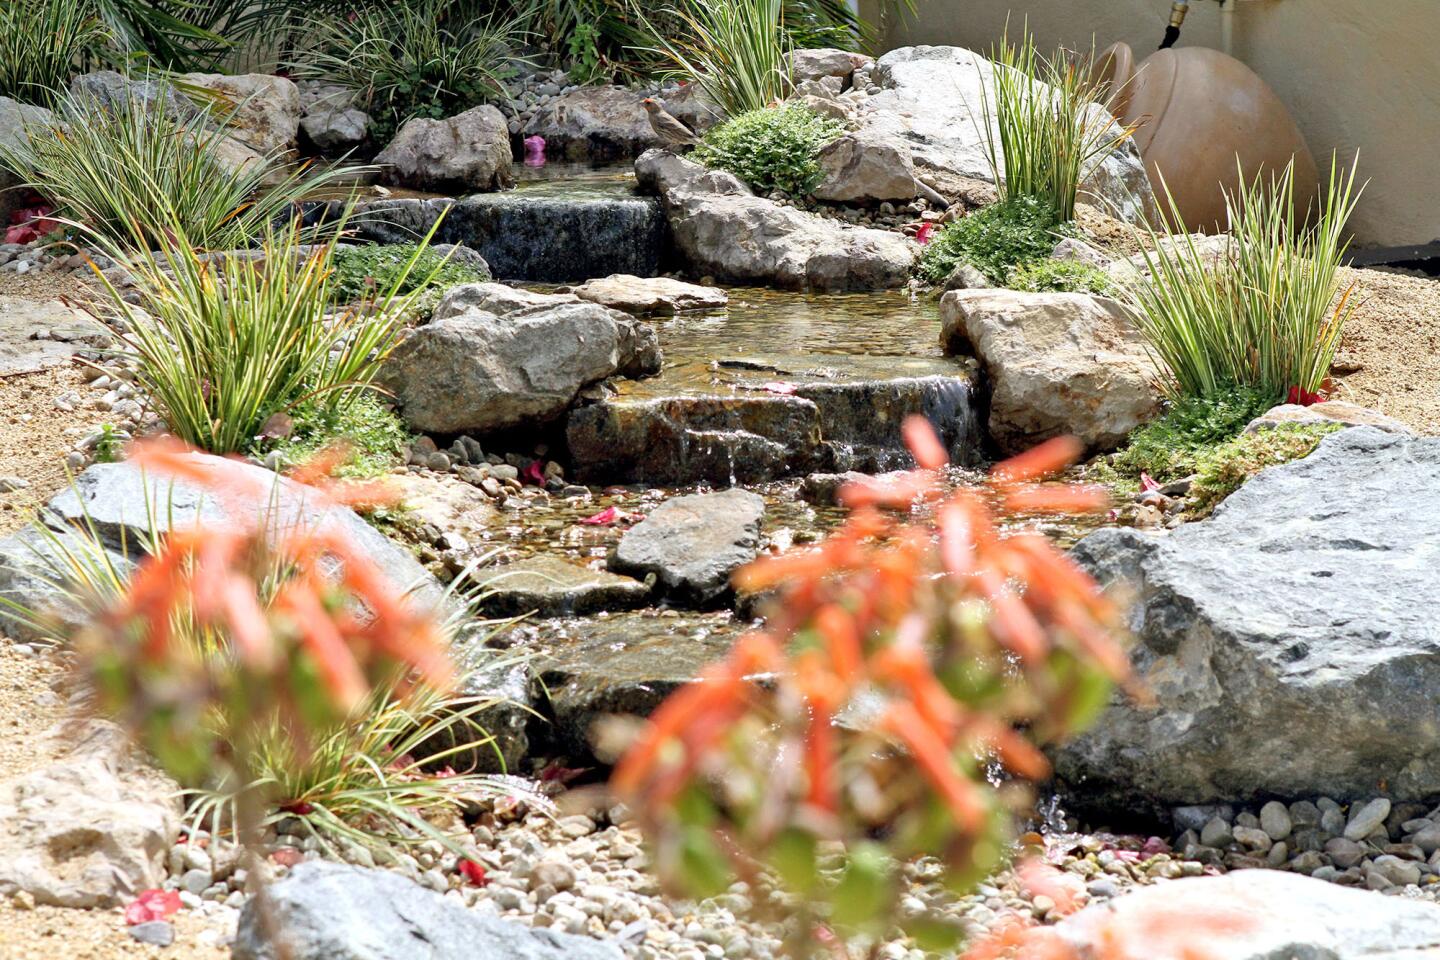 Photo Gallery: Drought tolerant garden saves water